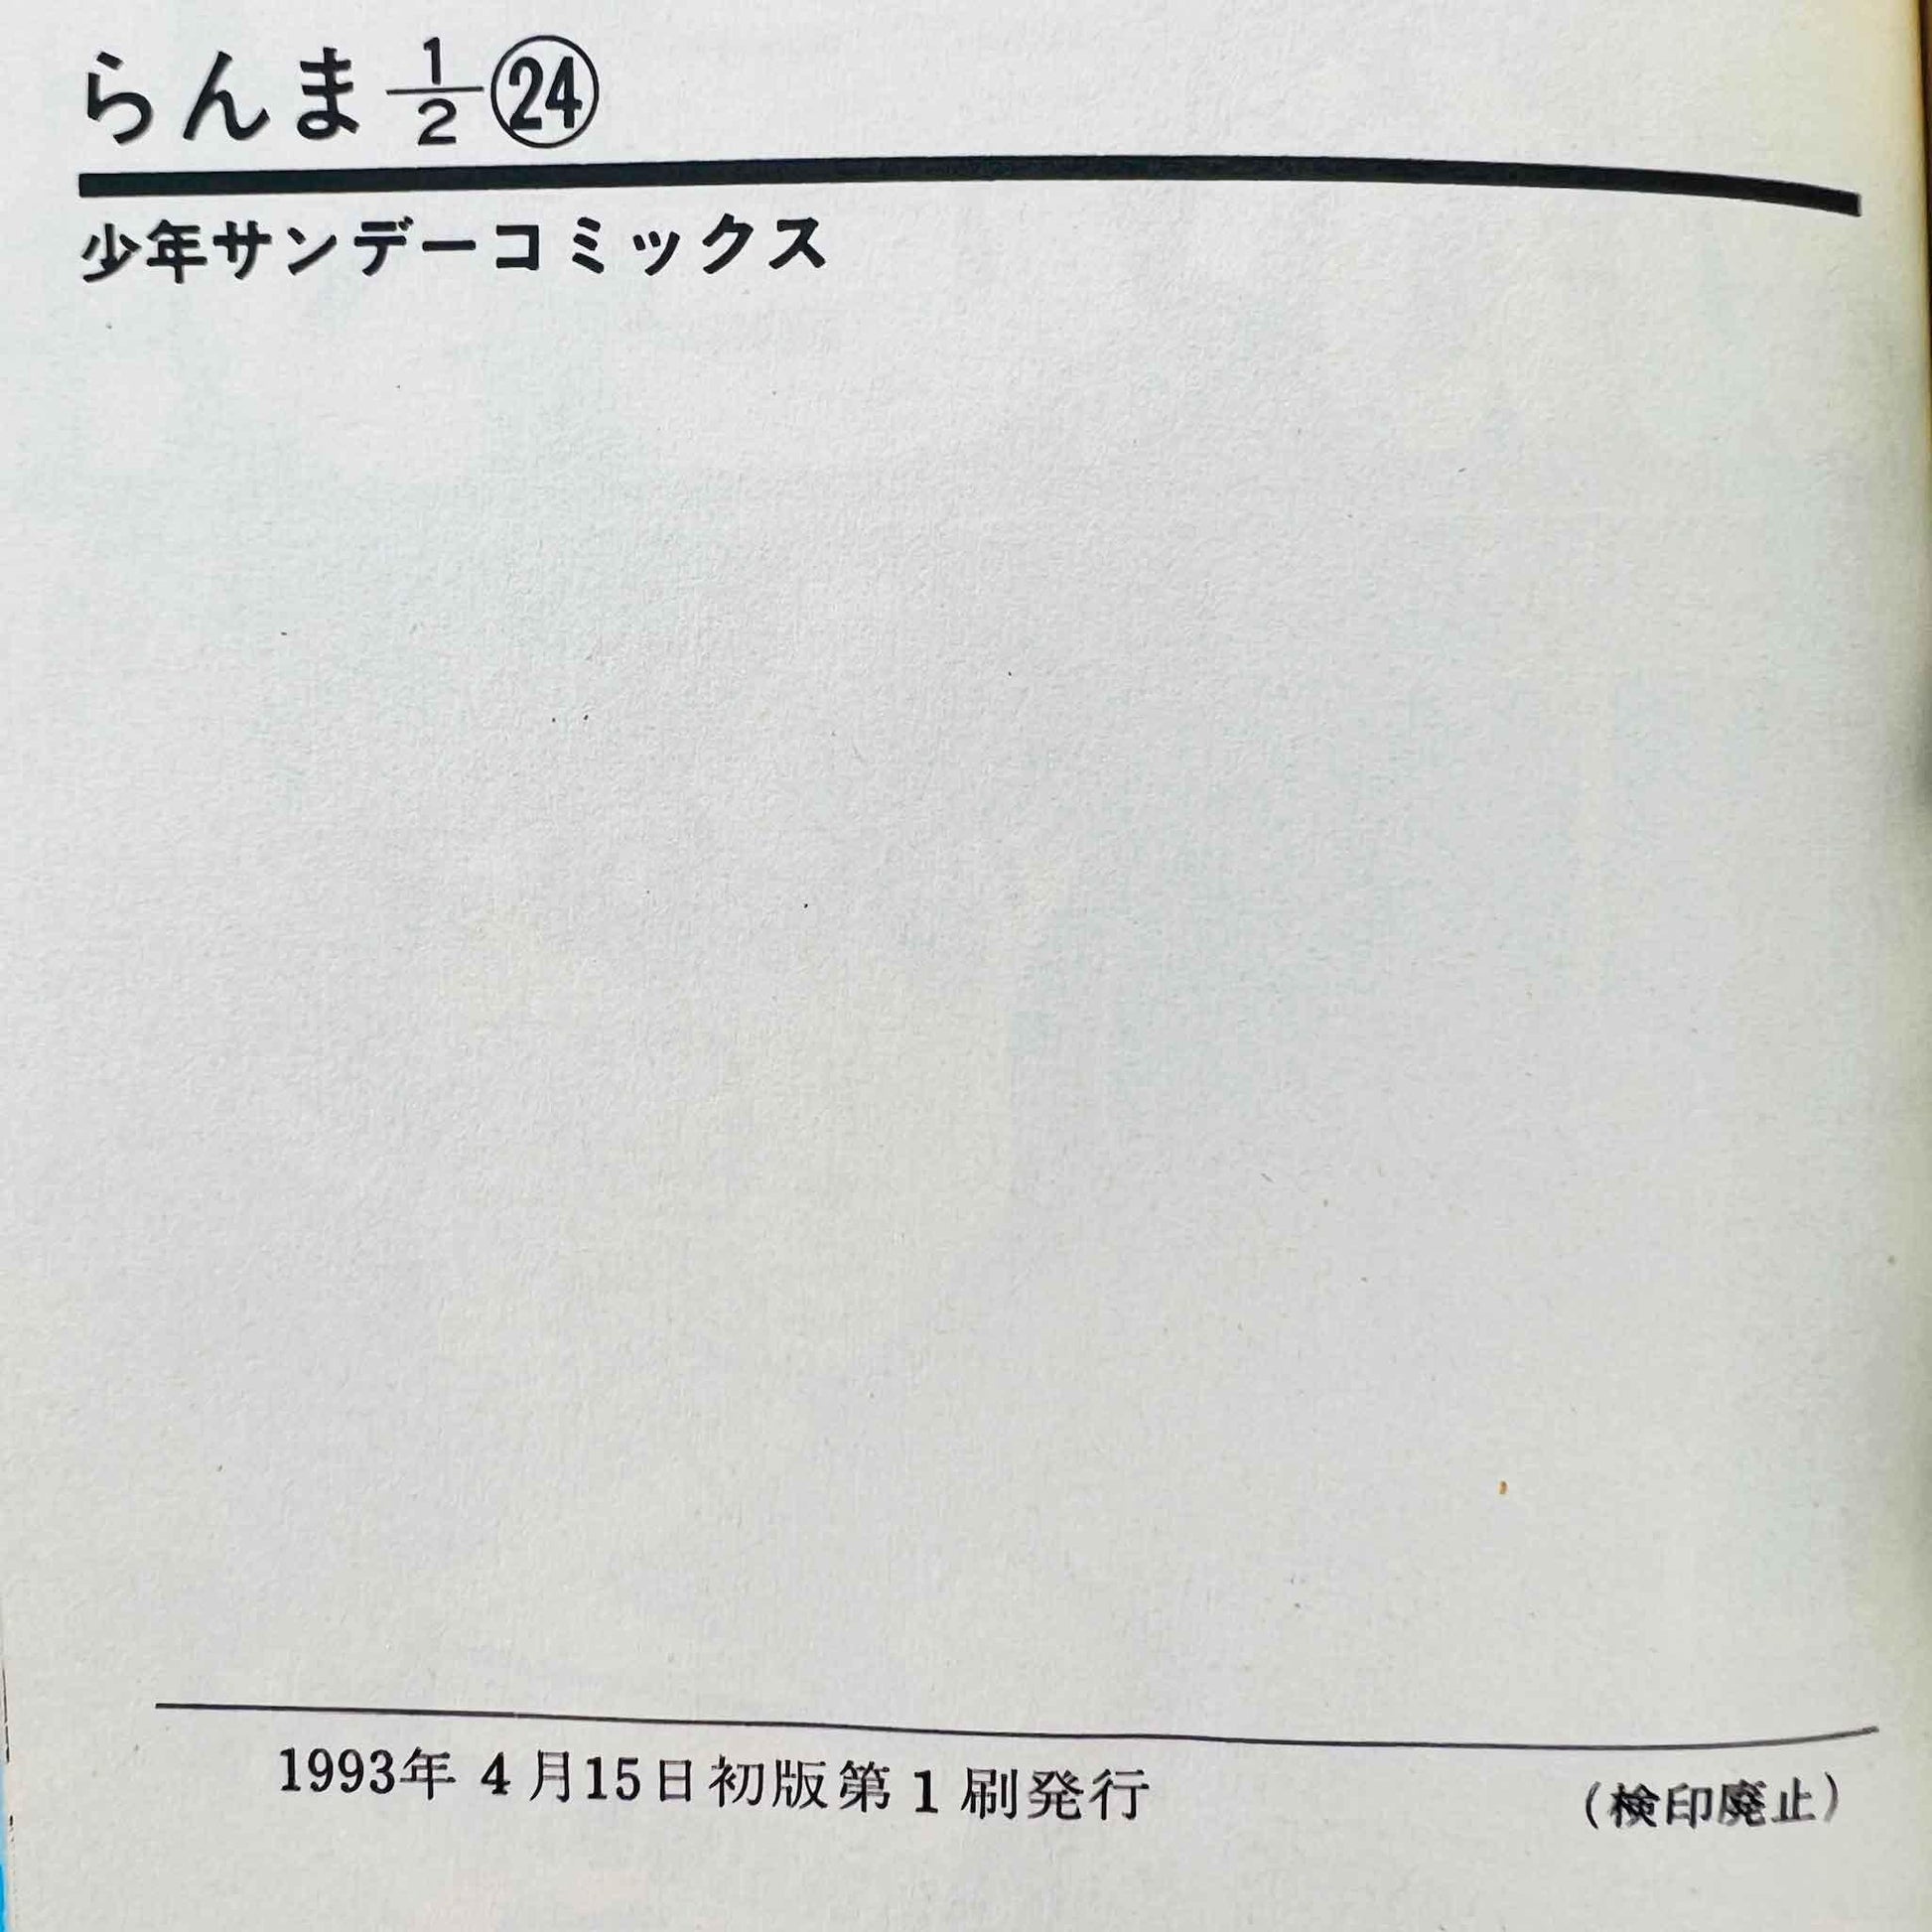 Ranma ½ - Volume 24 - 1stPrint.net - 1st First Print Edition Manga Store - M-RANMA-24-001